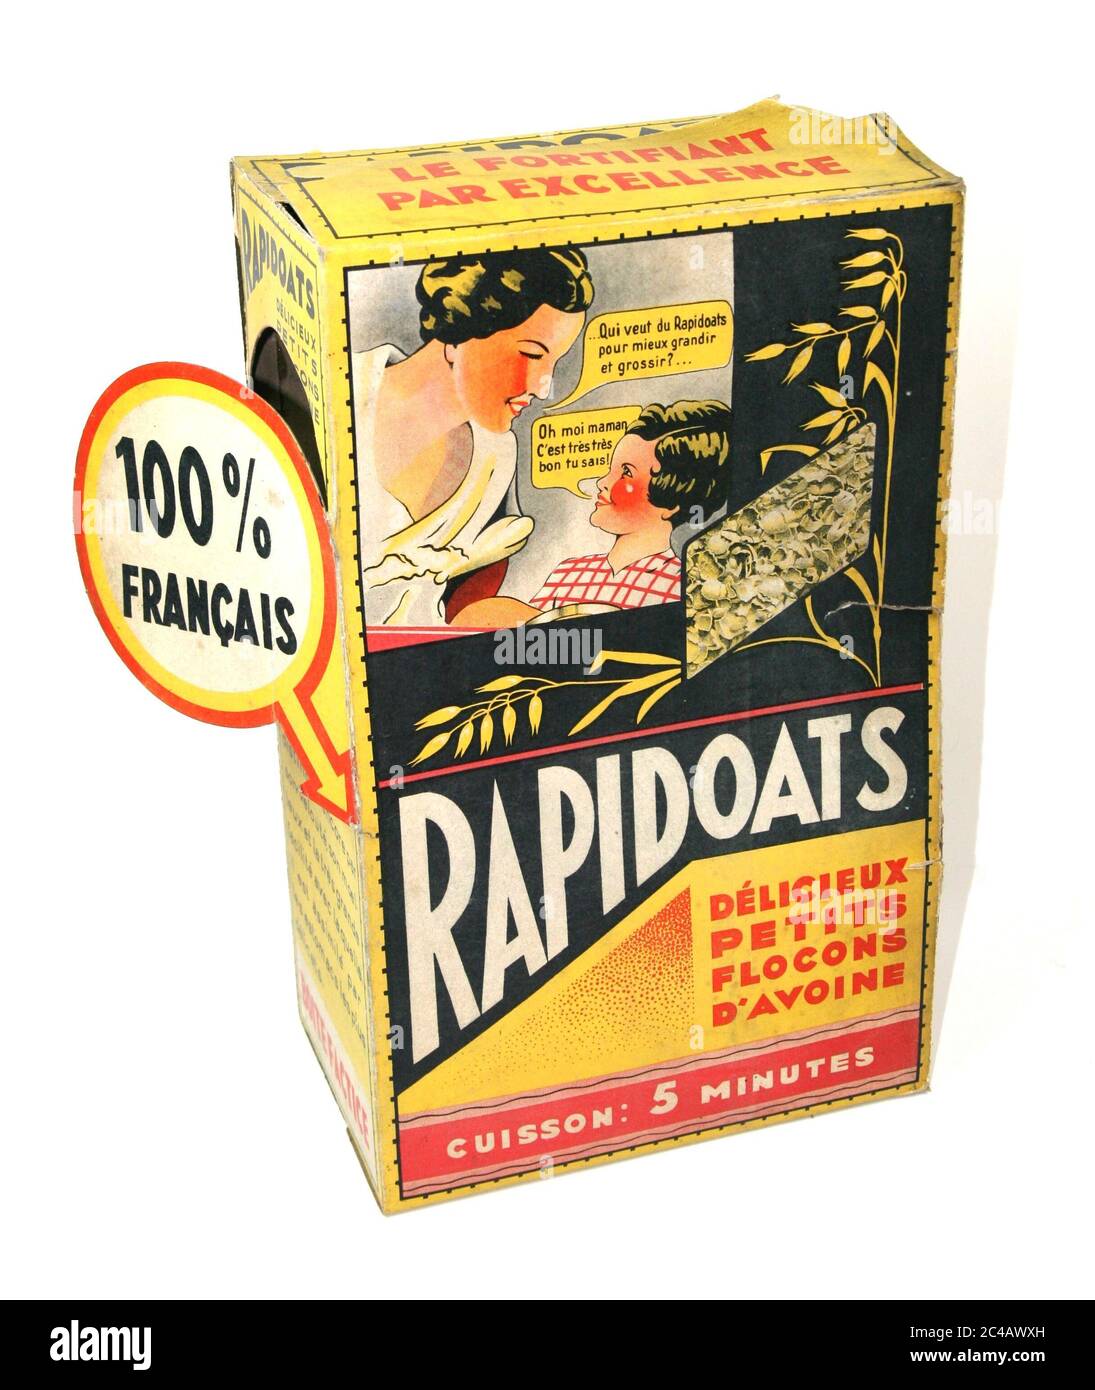 Boite Rapidoats annees 40 / Rapidoats box years 40 Stock Photo